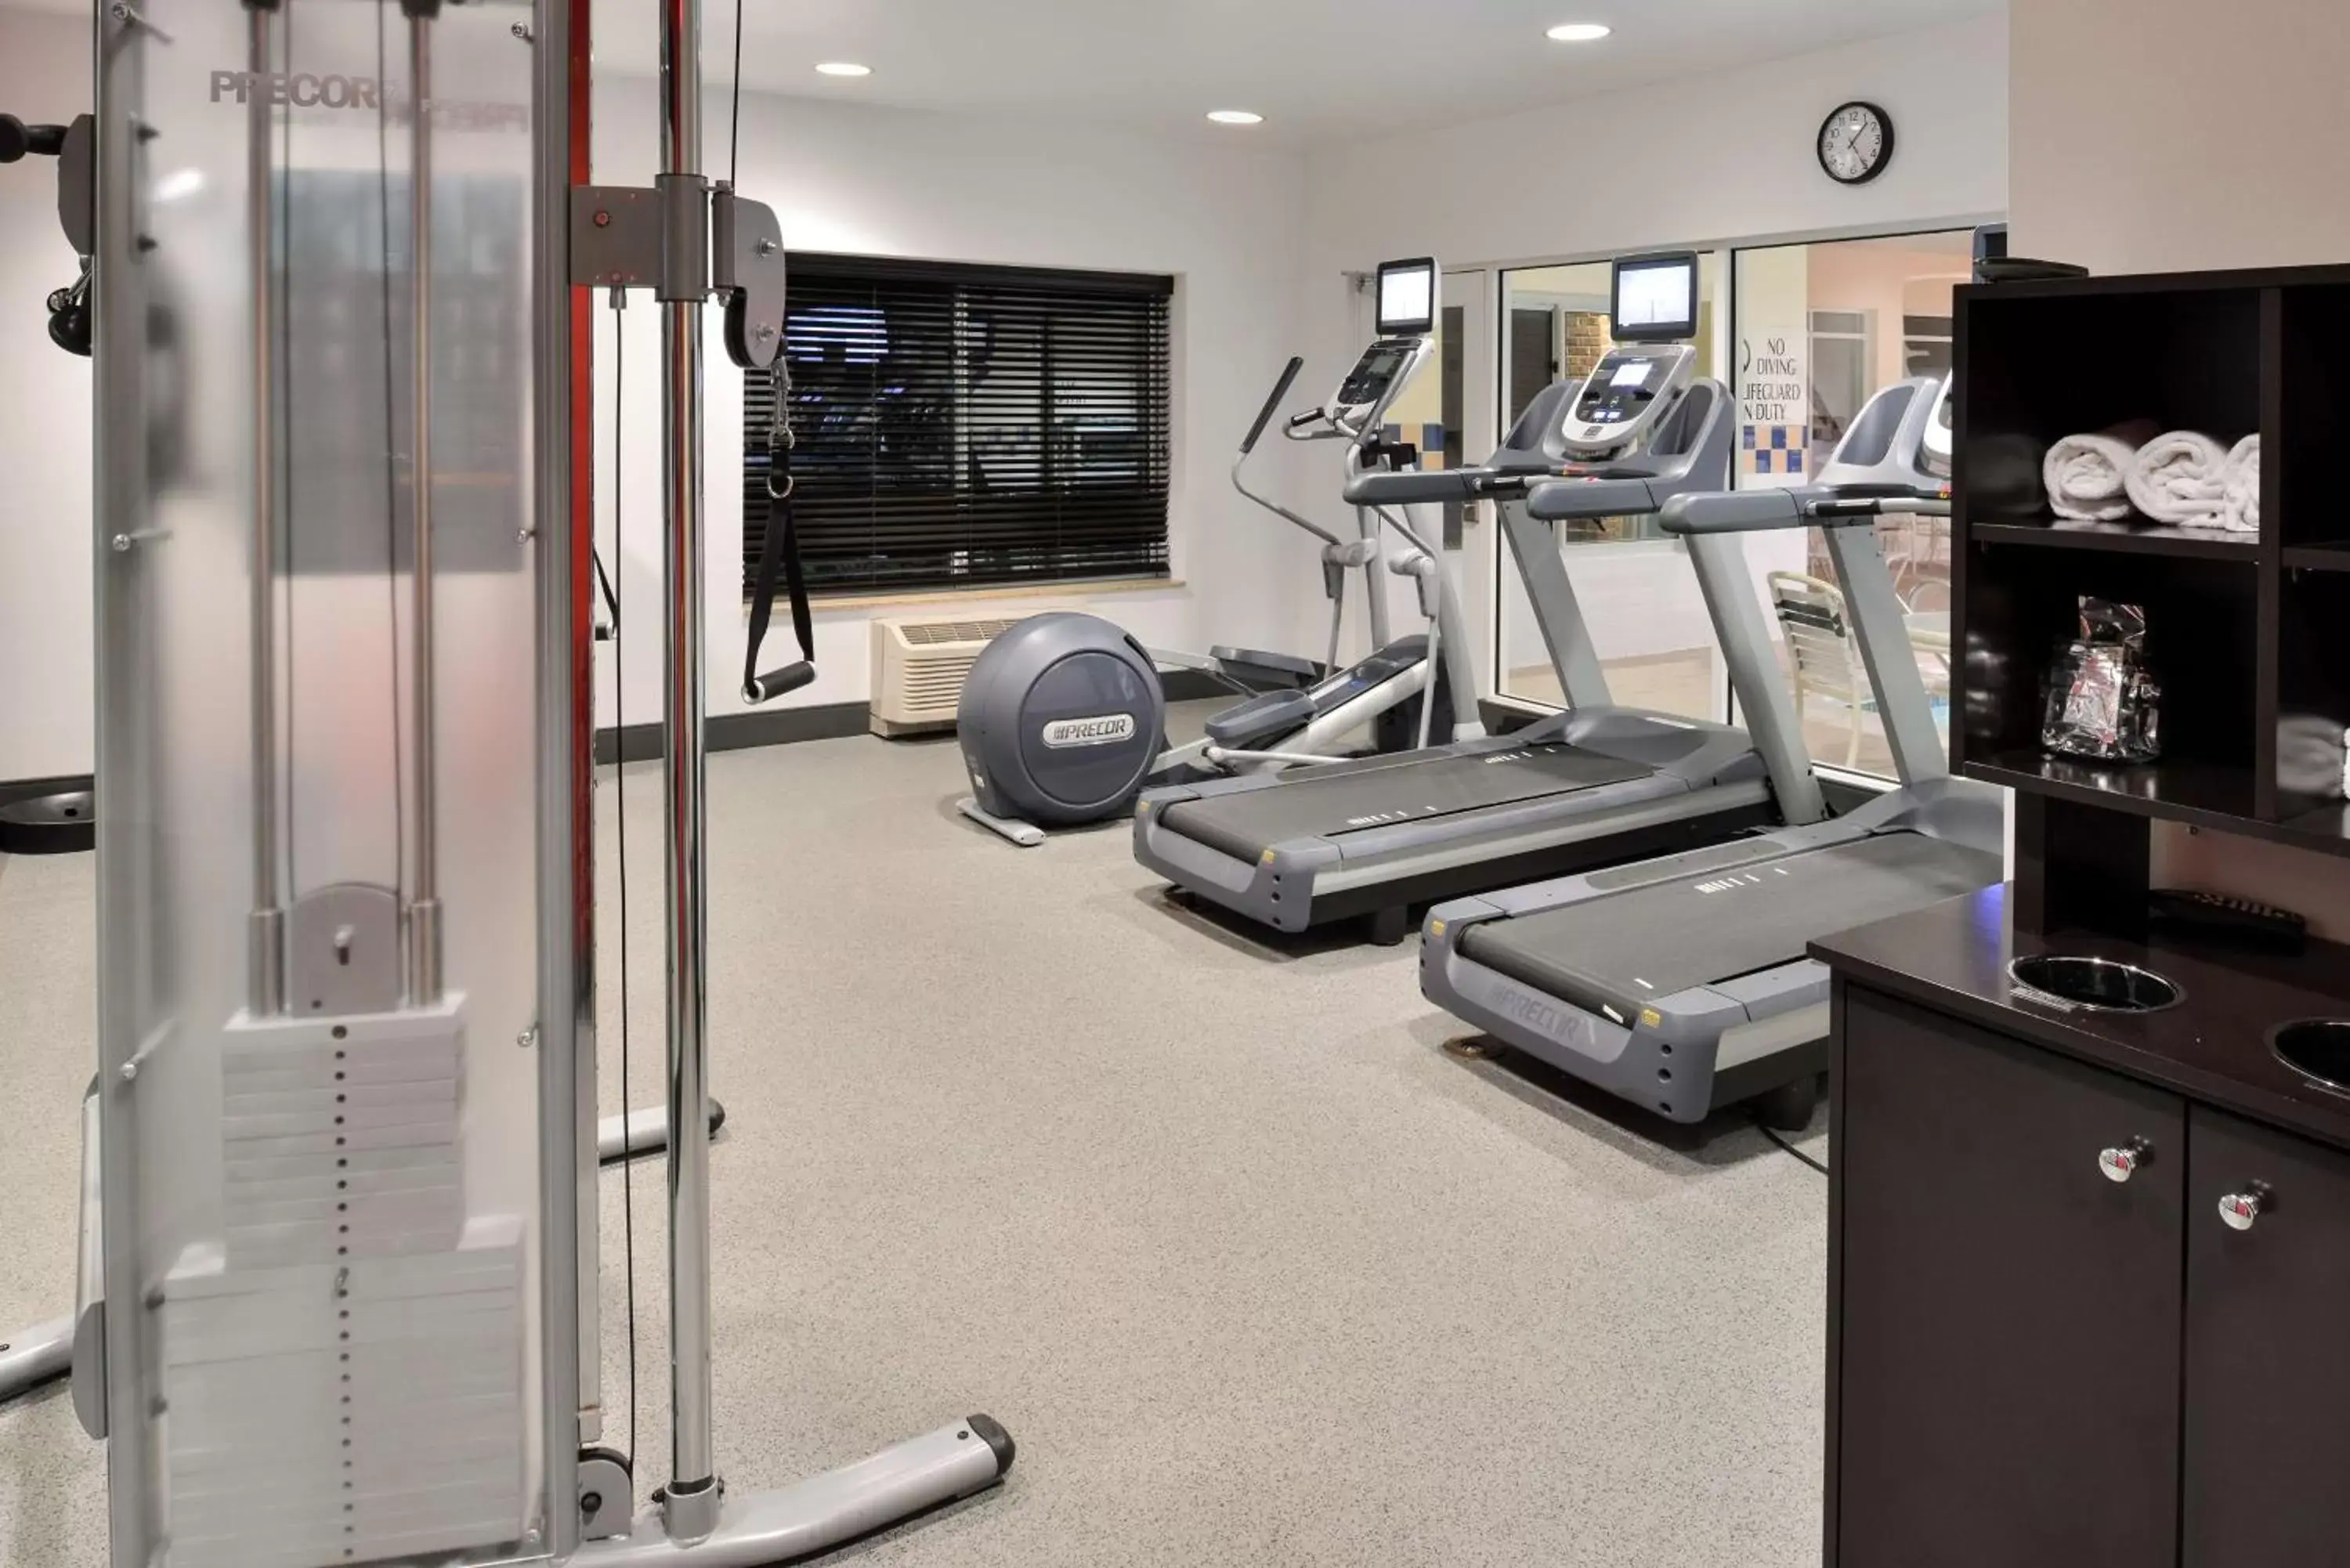 Fitness centre/facilities, Fitness Center/Facilities in Hilton Garden Inn Columbia